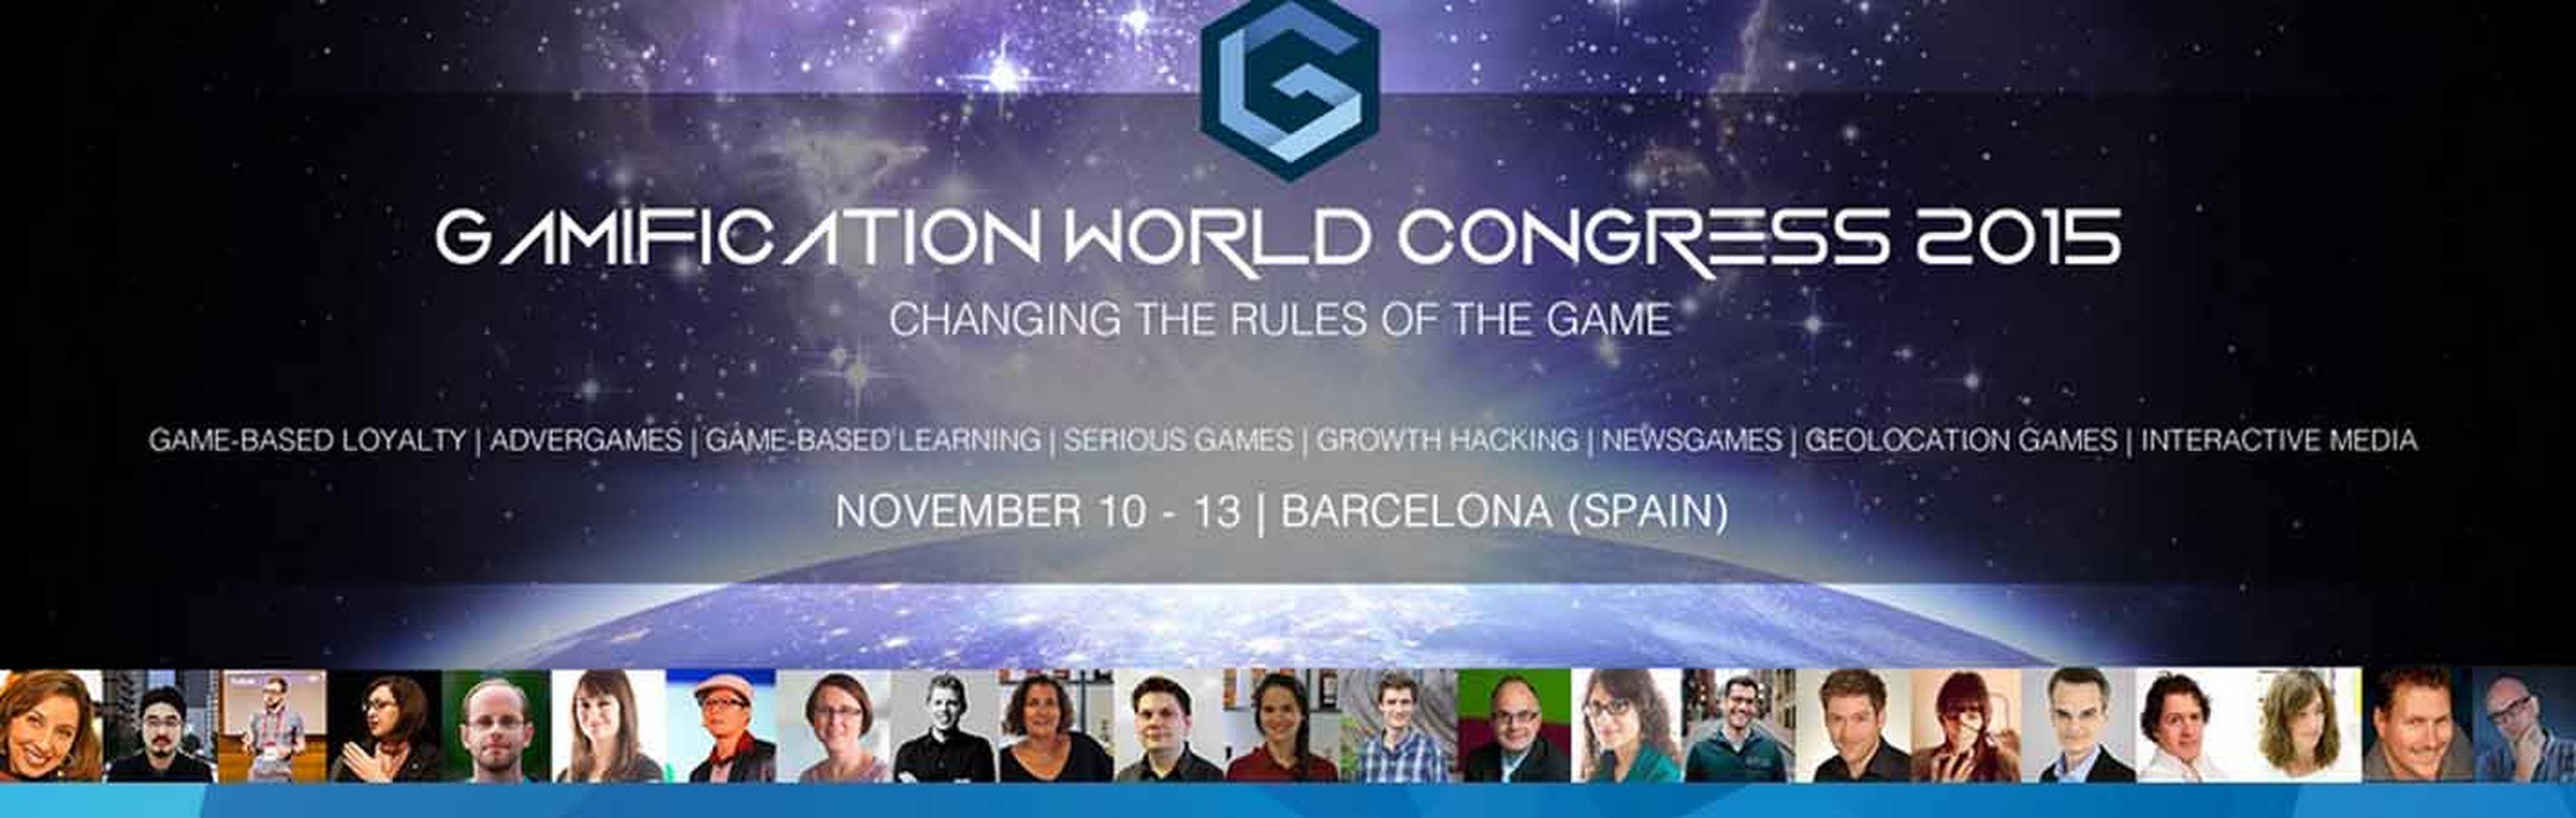 Gamification World Congress 2015